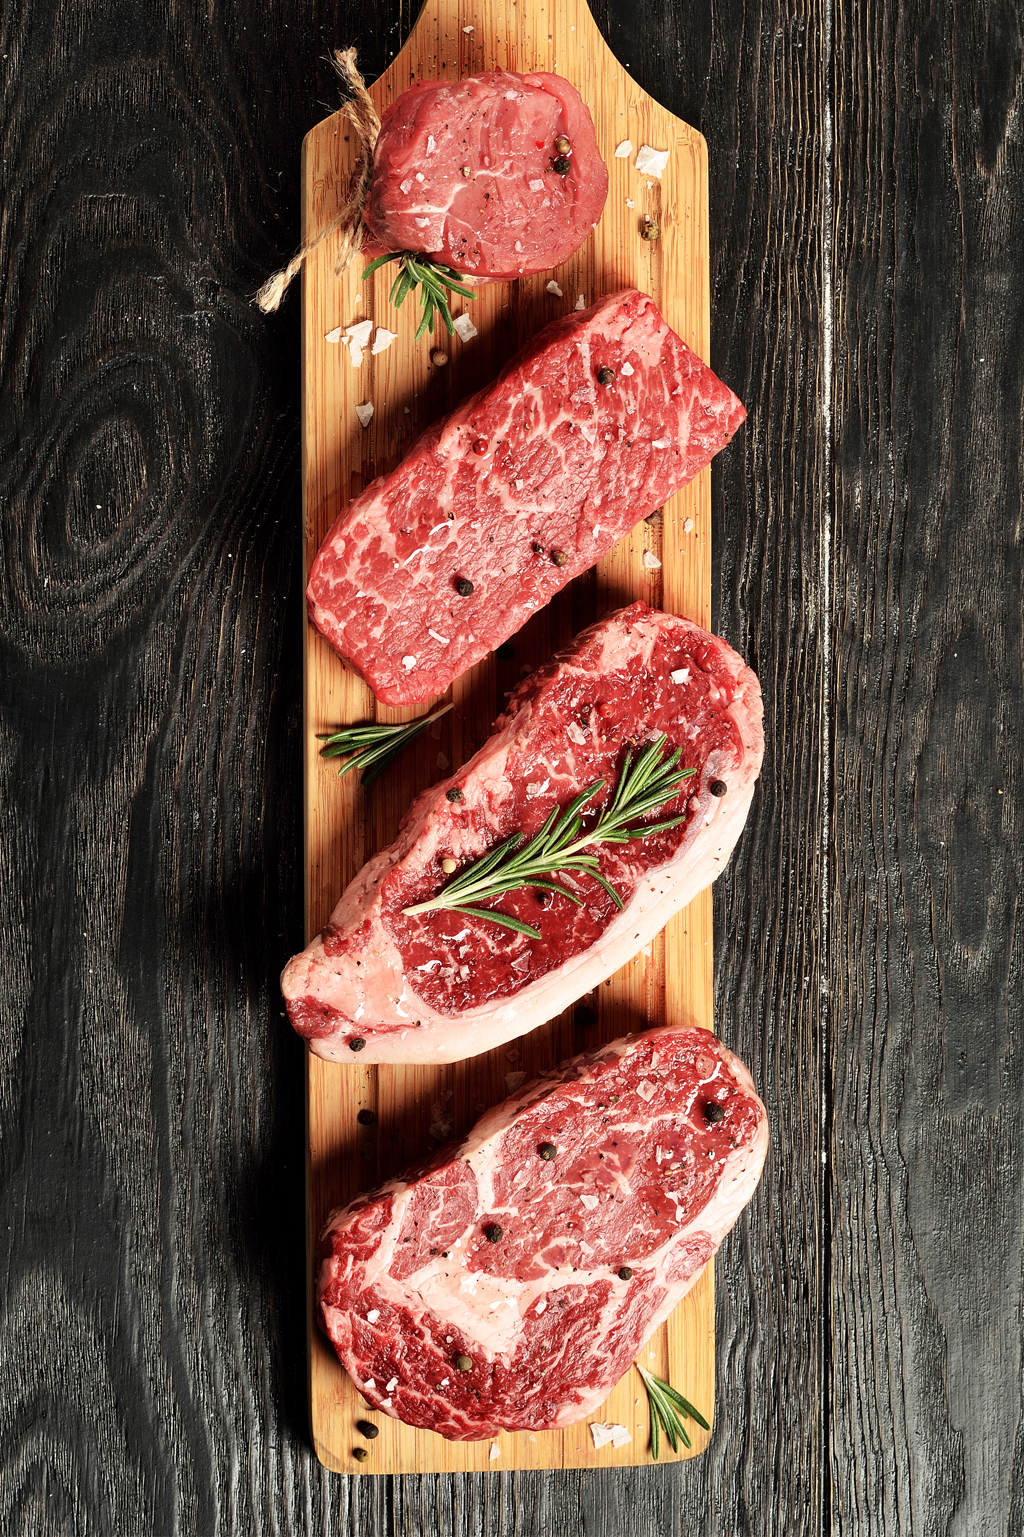 Fresh raw Prime Black Angus beef steaks on wooden board: Tenderloin, Denver Cut, Striploin, Rib Eye